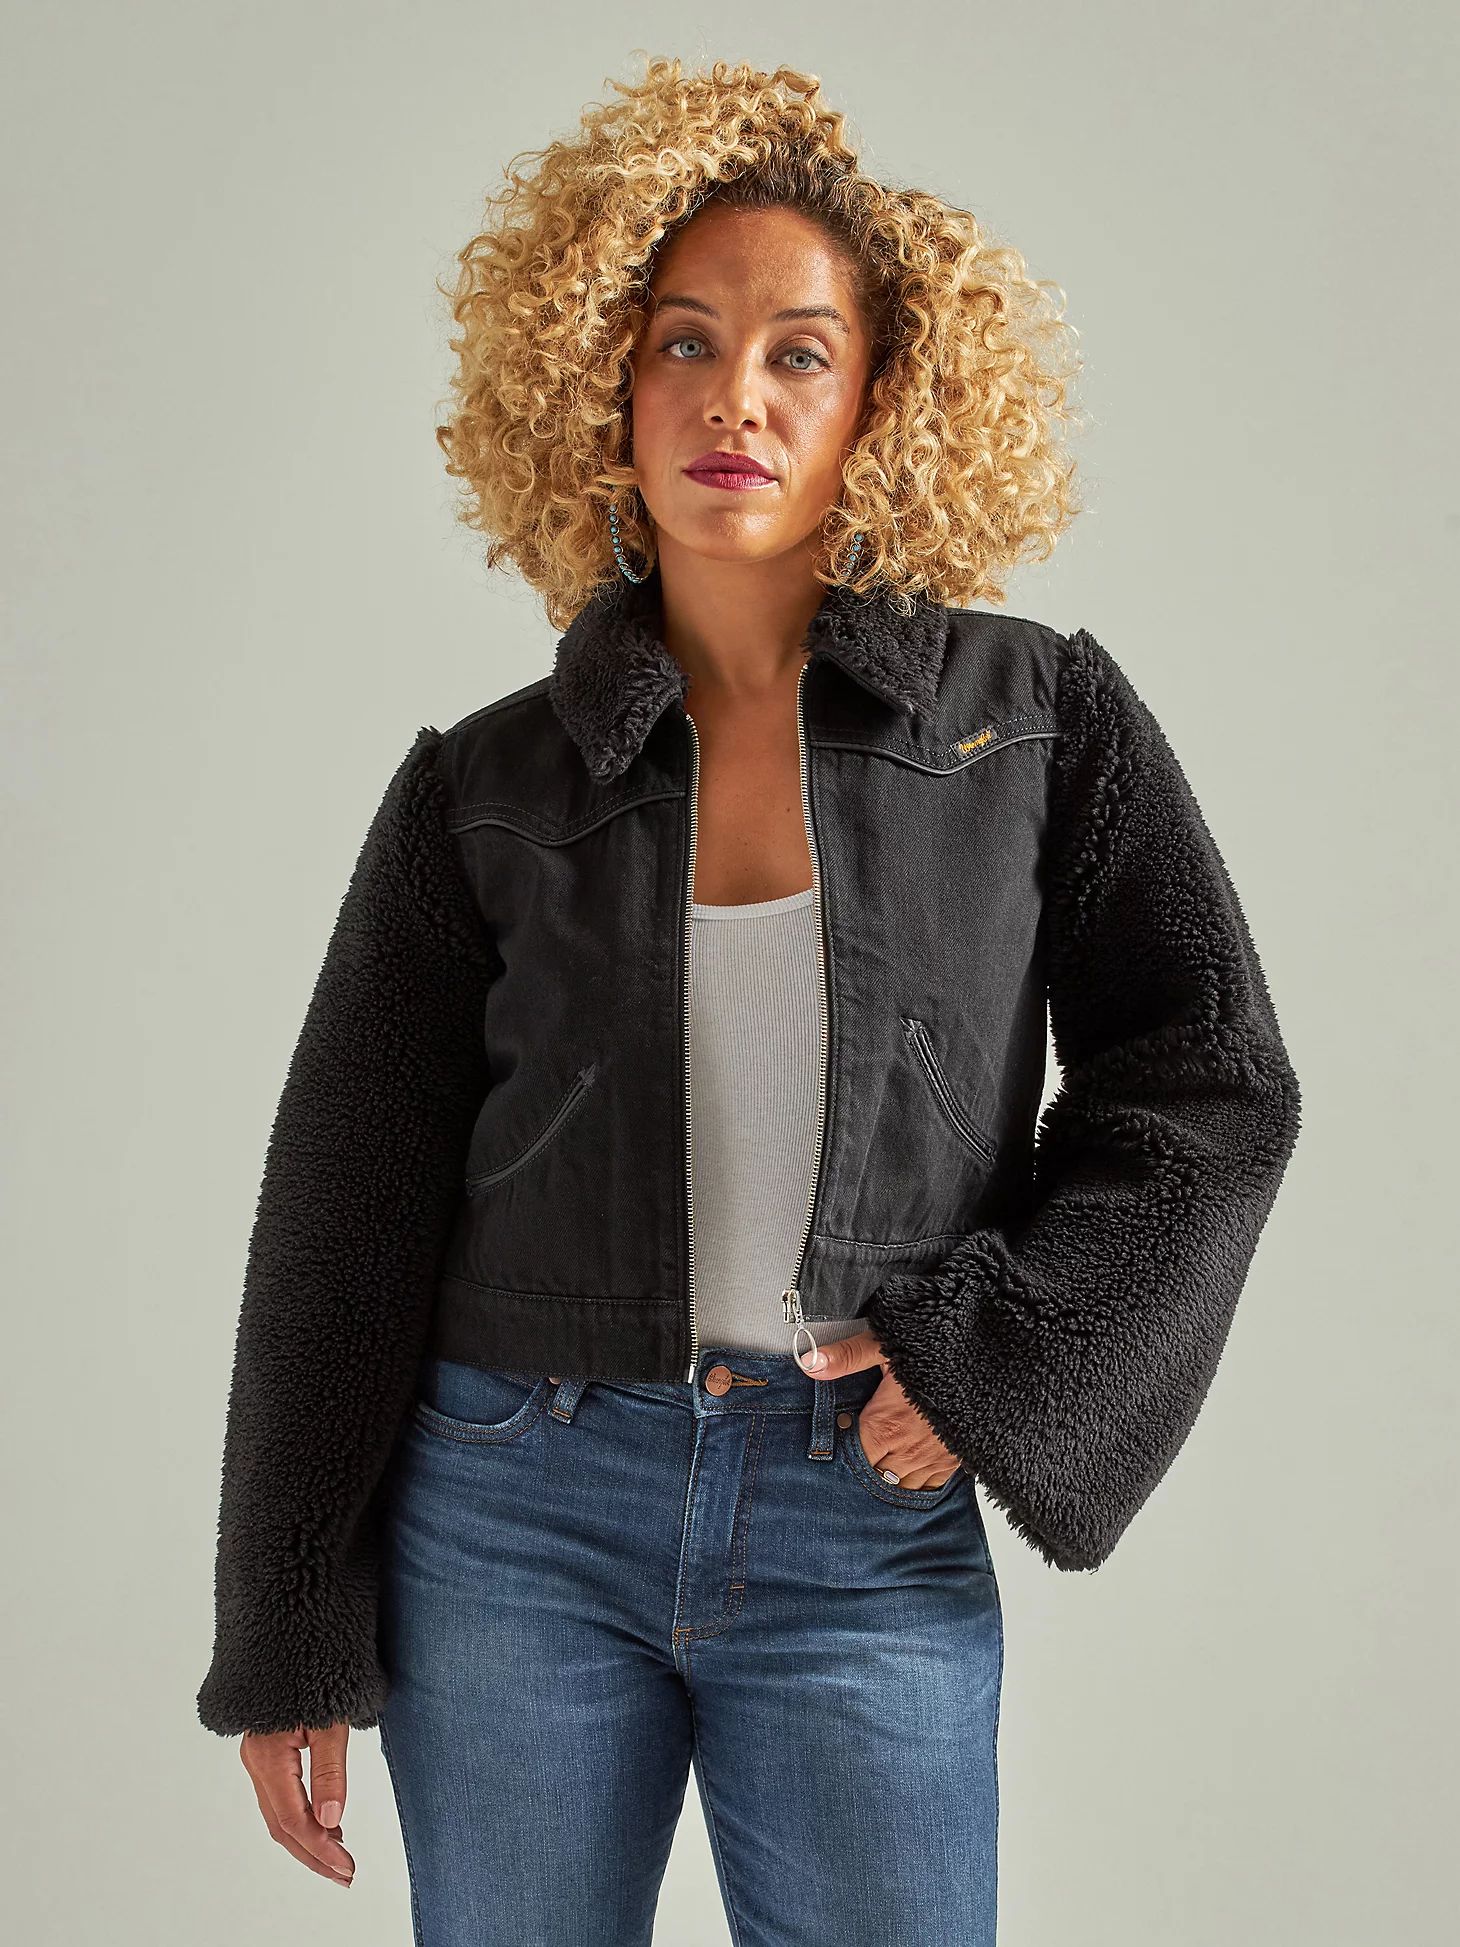 Women's Wrangler Retro® Denim Contrast Sleeve Jacket in Black | Wrangler